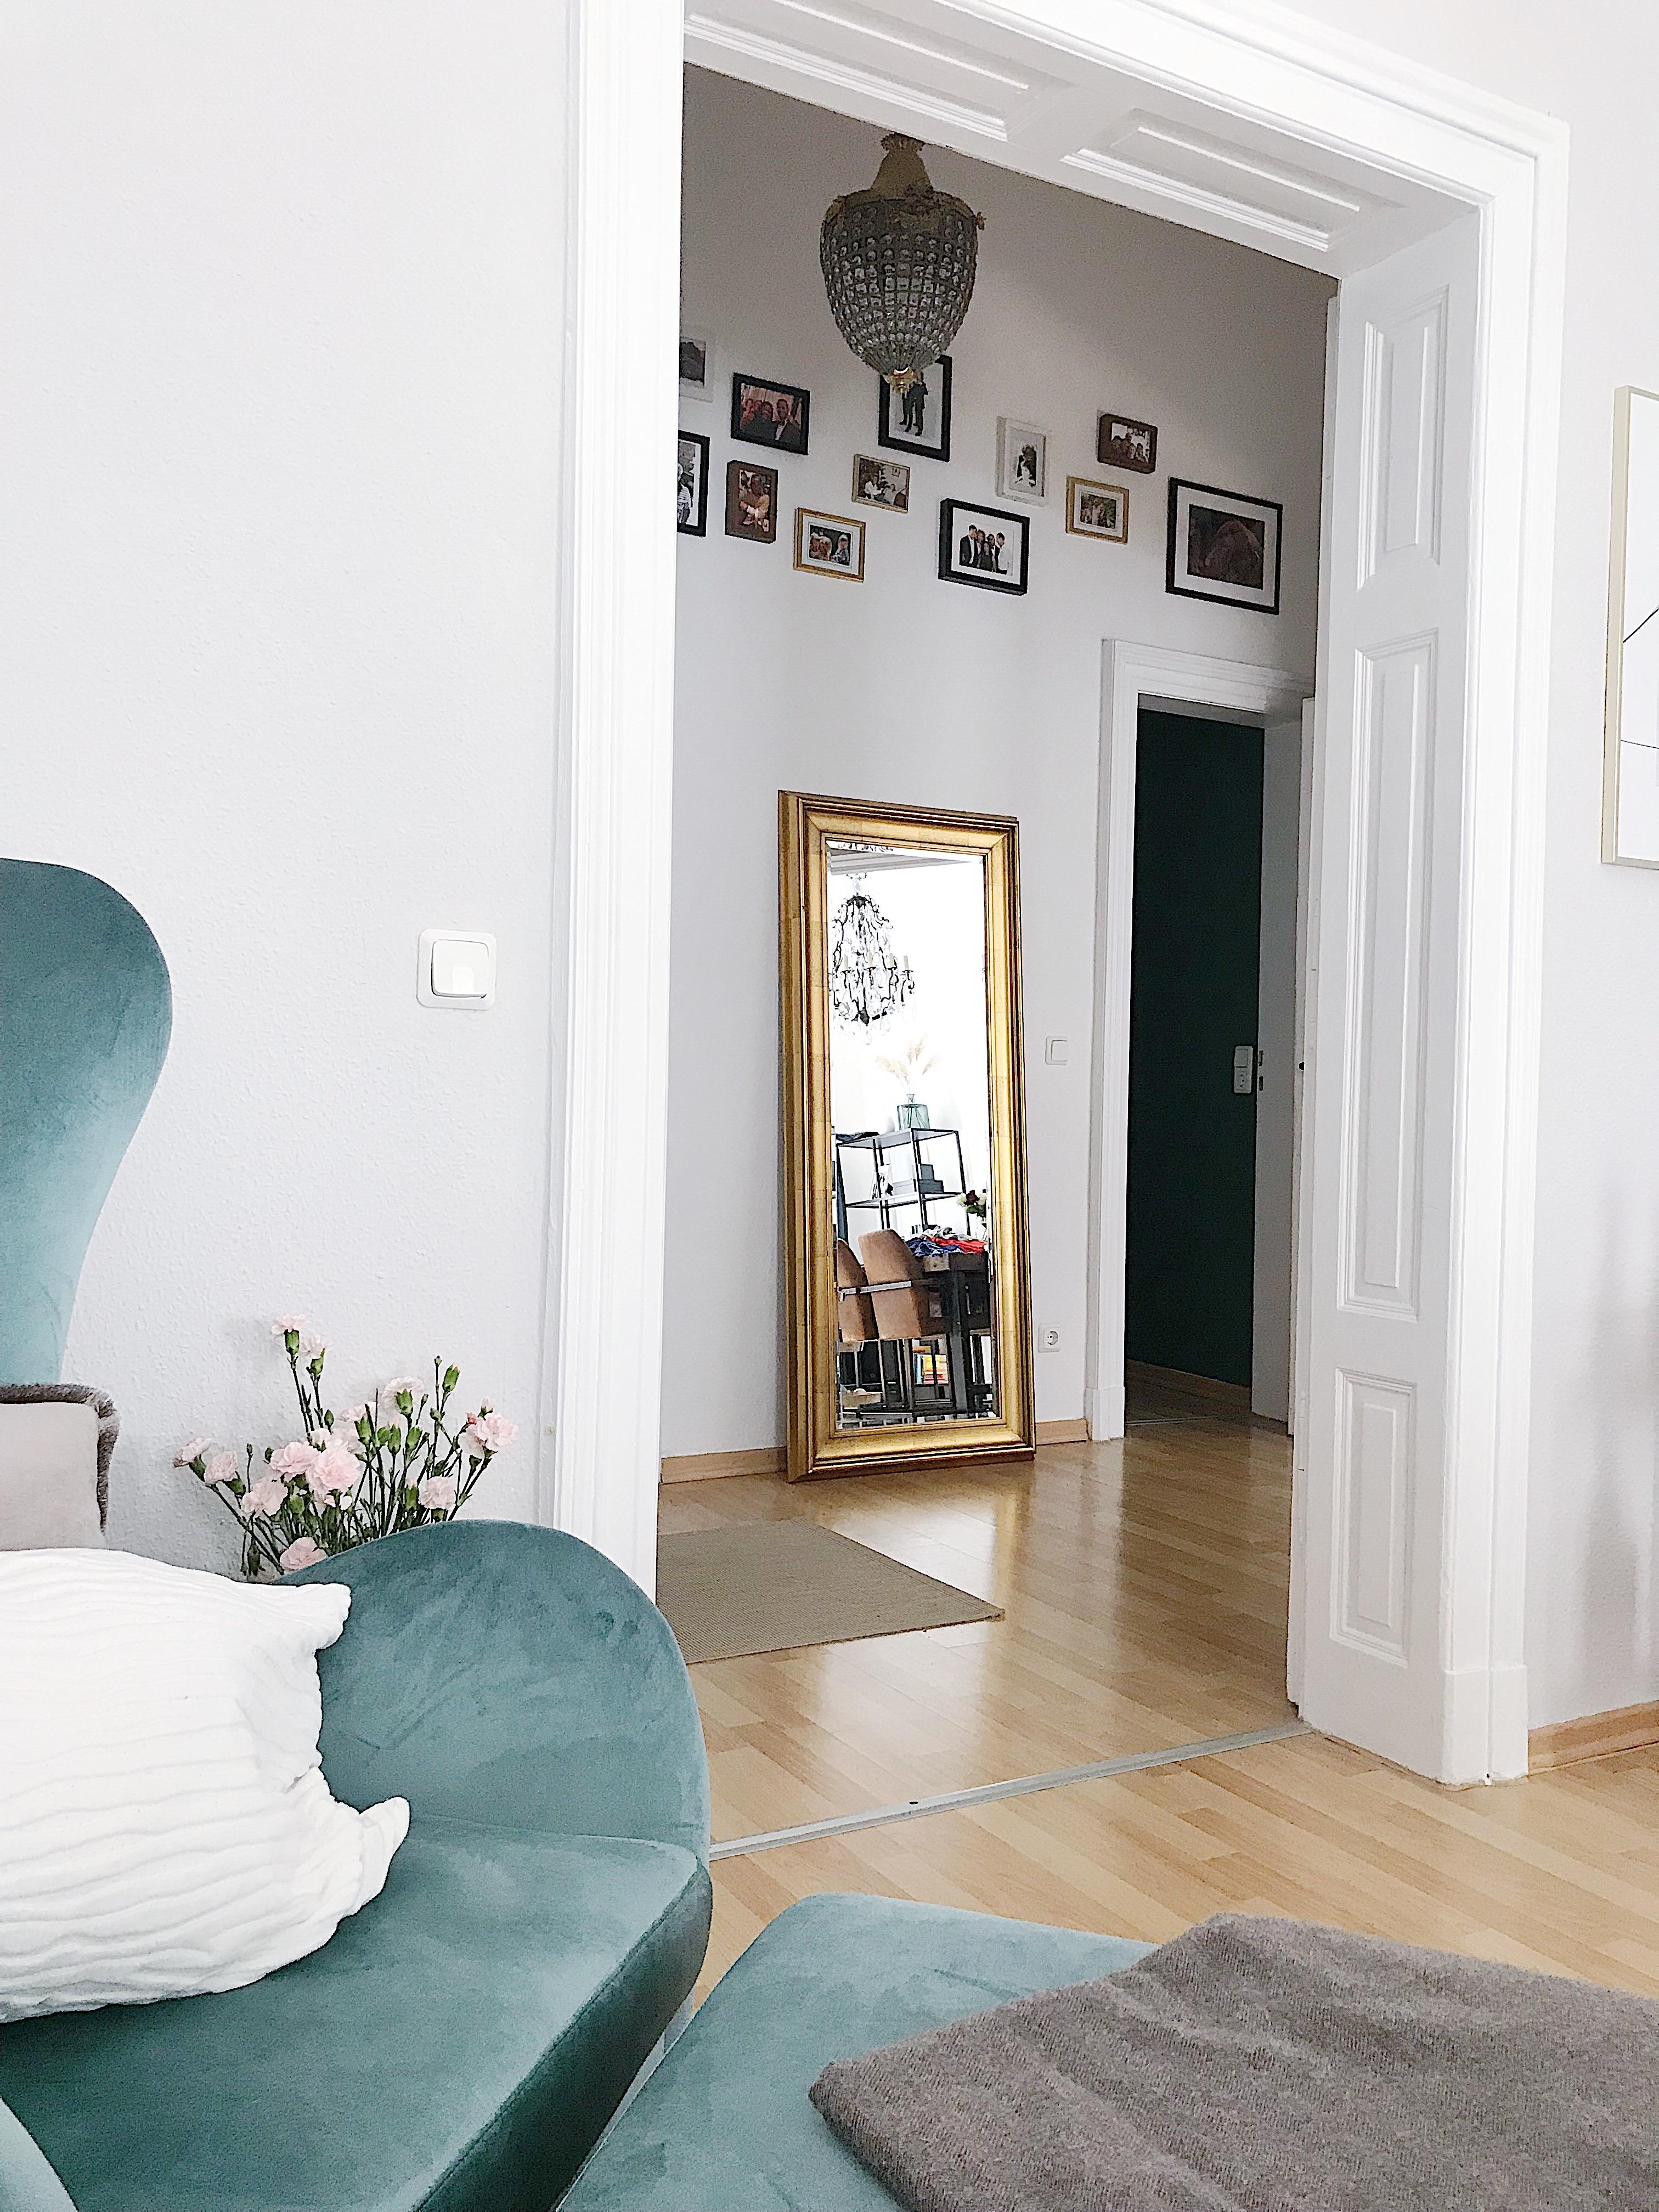 cozy times ahead. #livingroom #sessel #leseecke #flur #samt